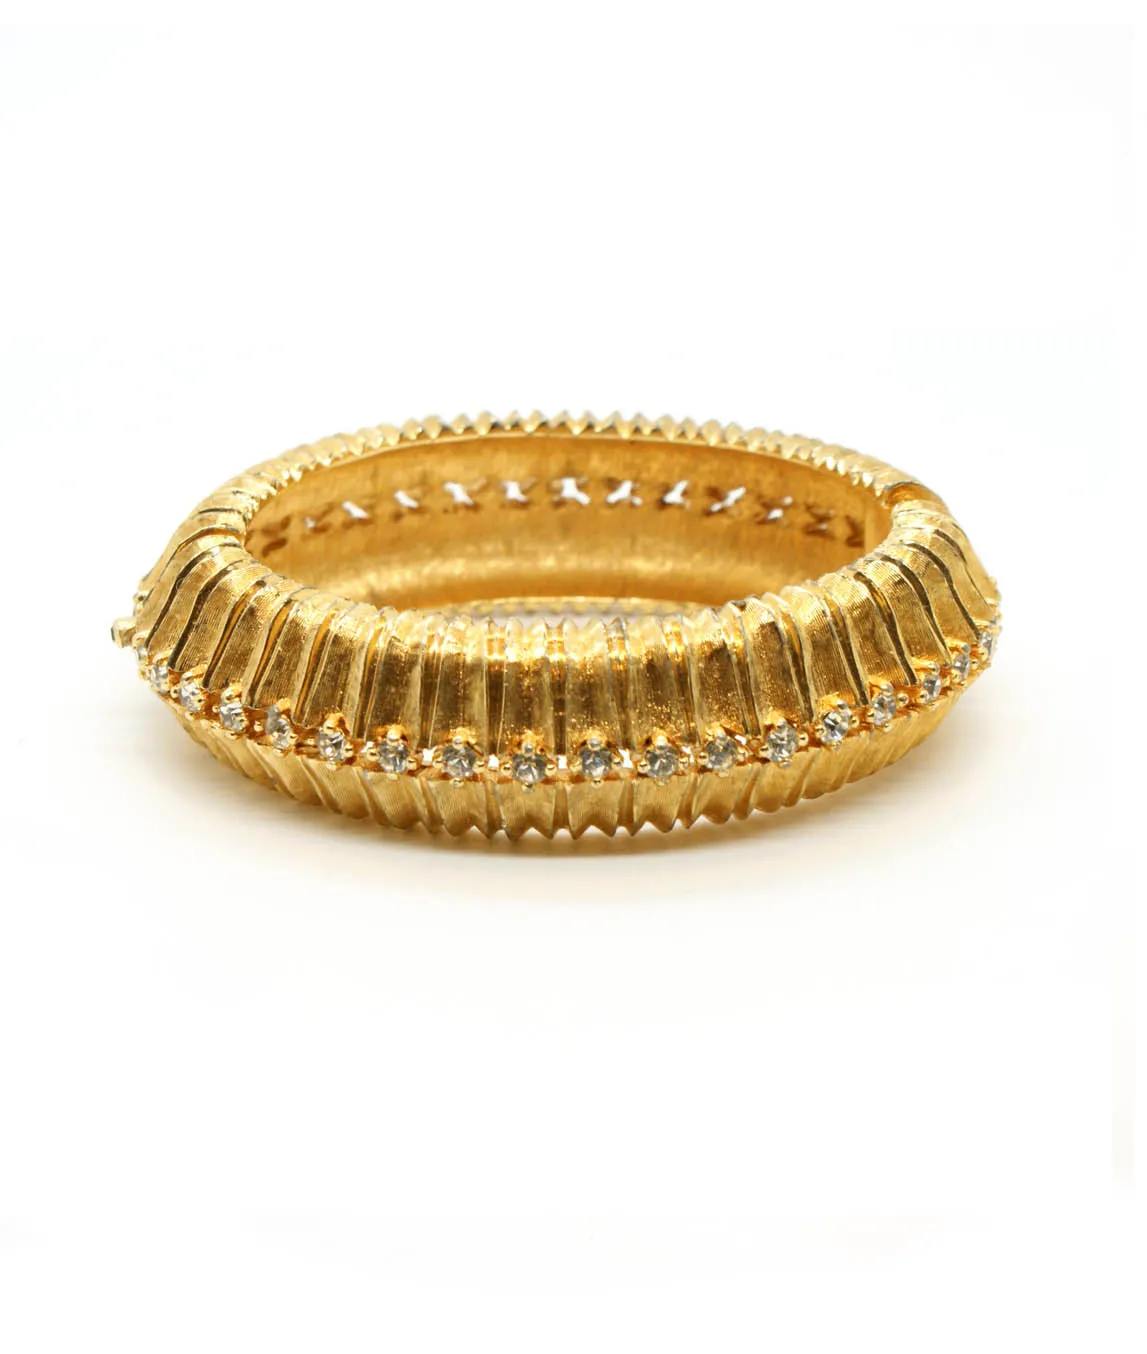 Vintage Joseph Mazer Gold and Rhinestone Bangle Bracelet